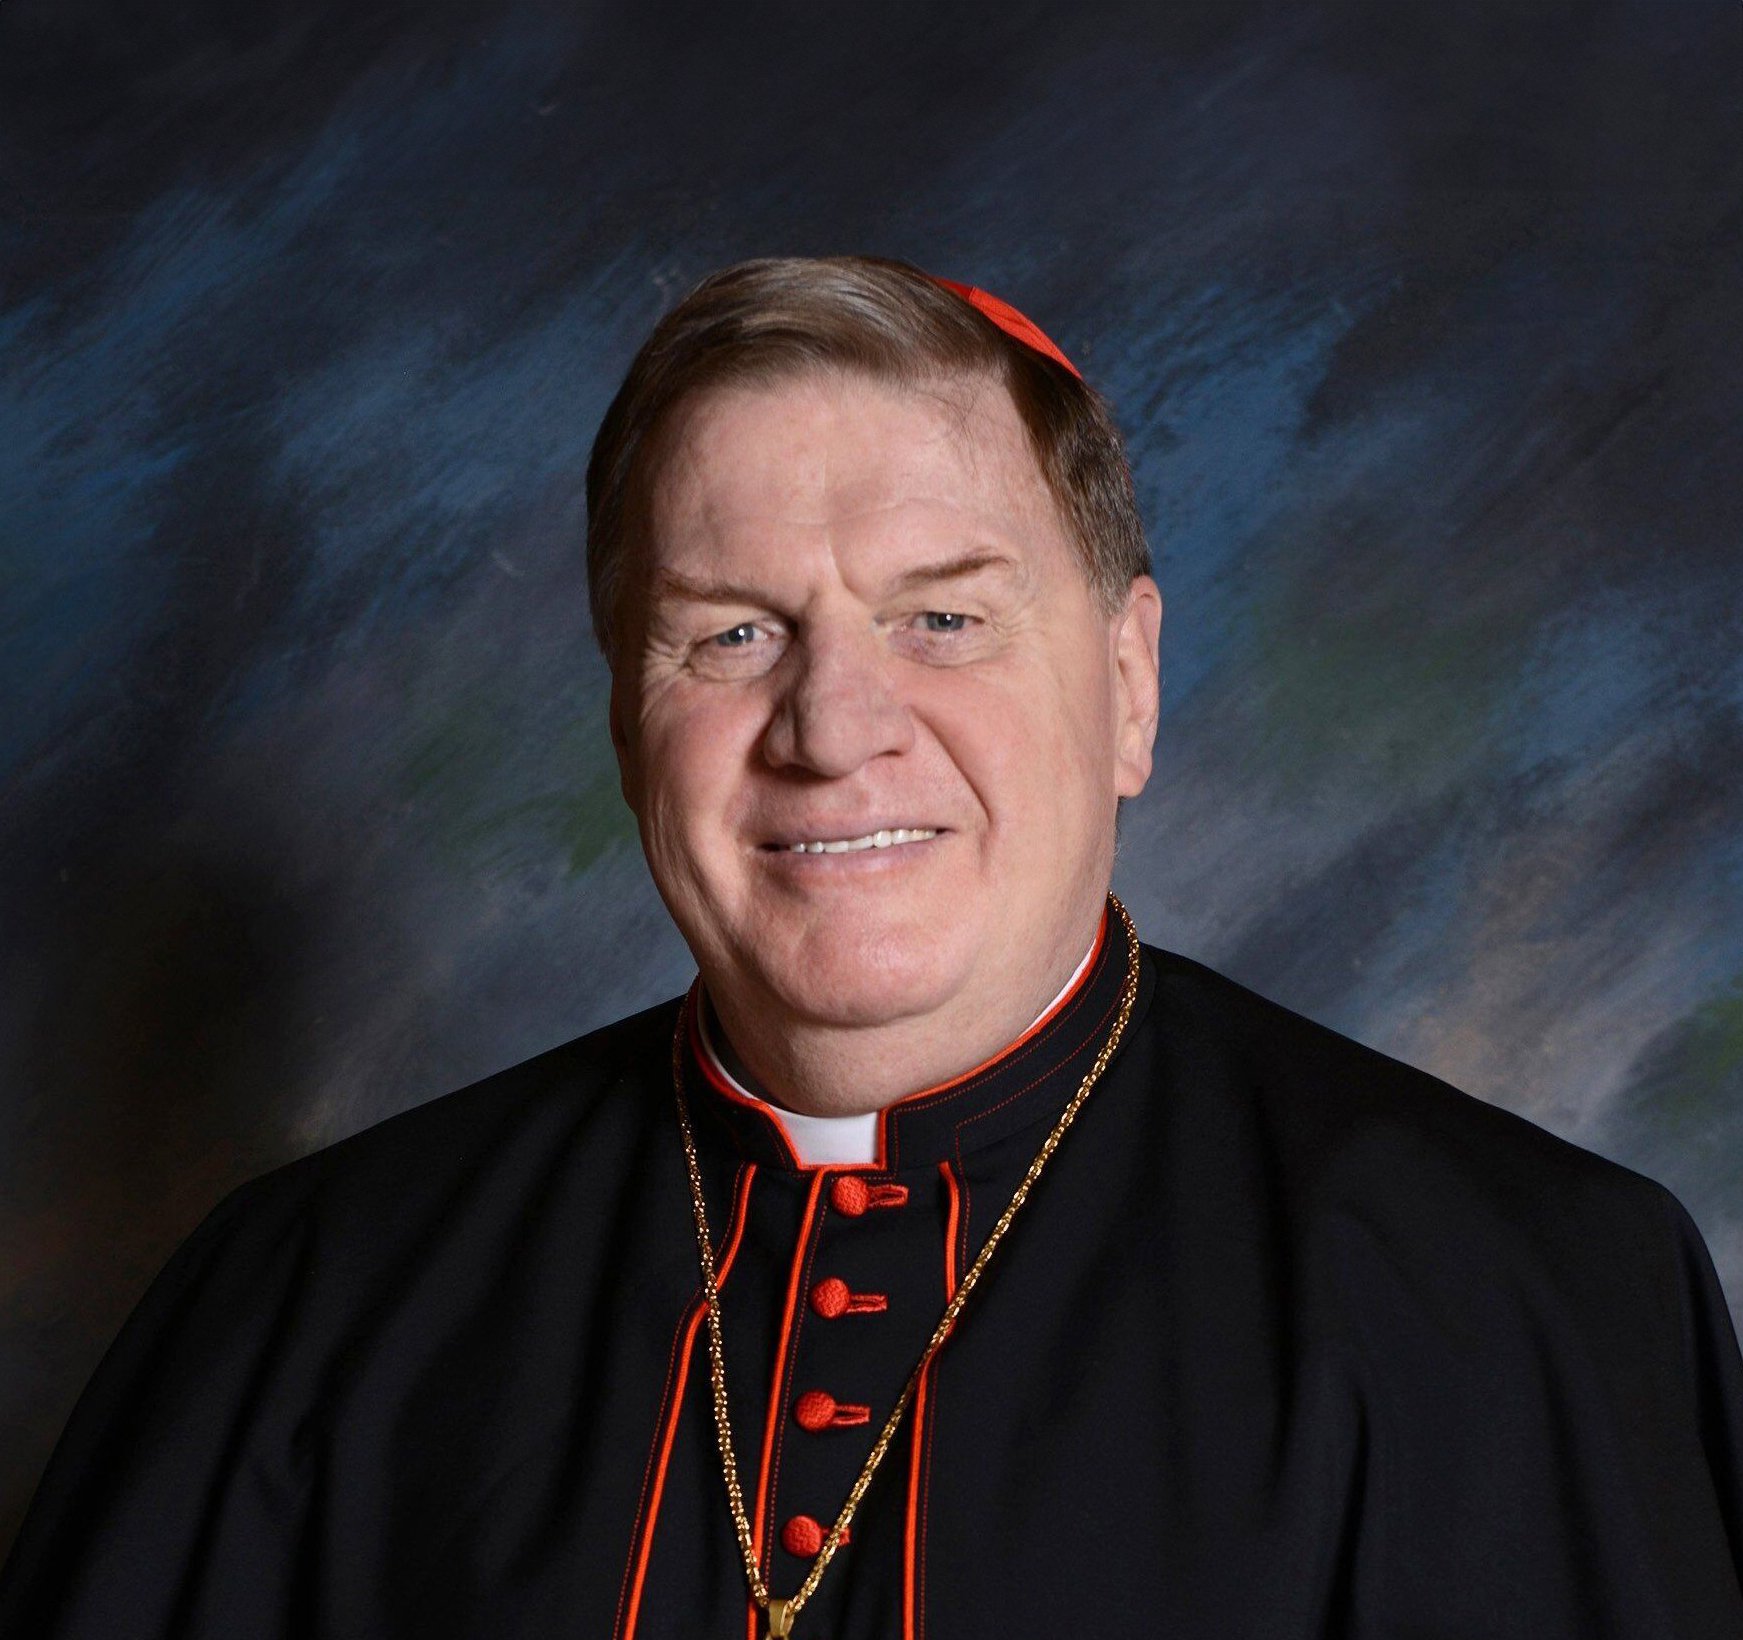 Cardinal Joseph W. Tobin, C.Ss.R., D.D.